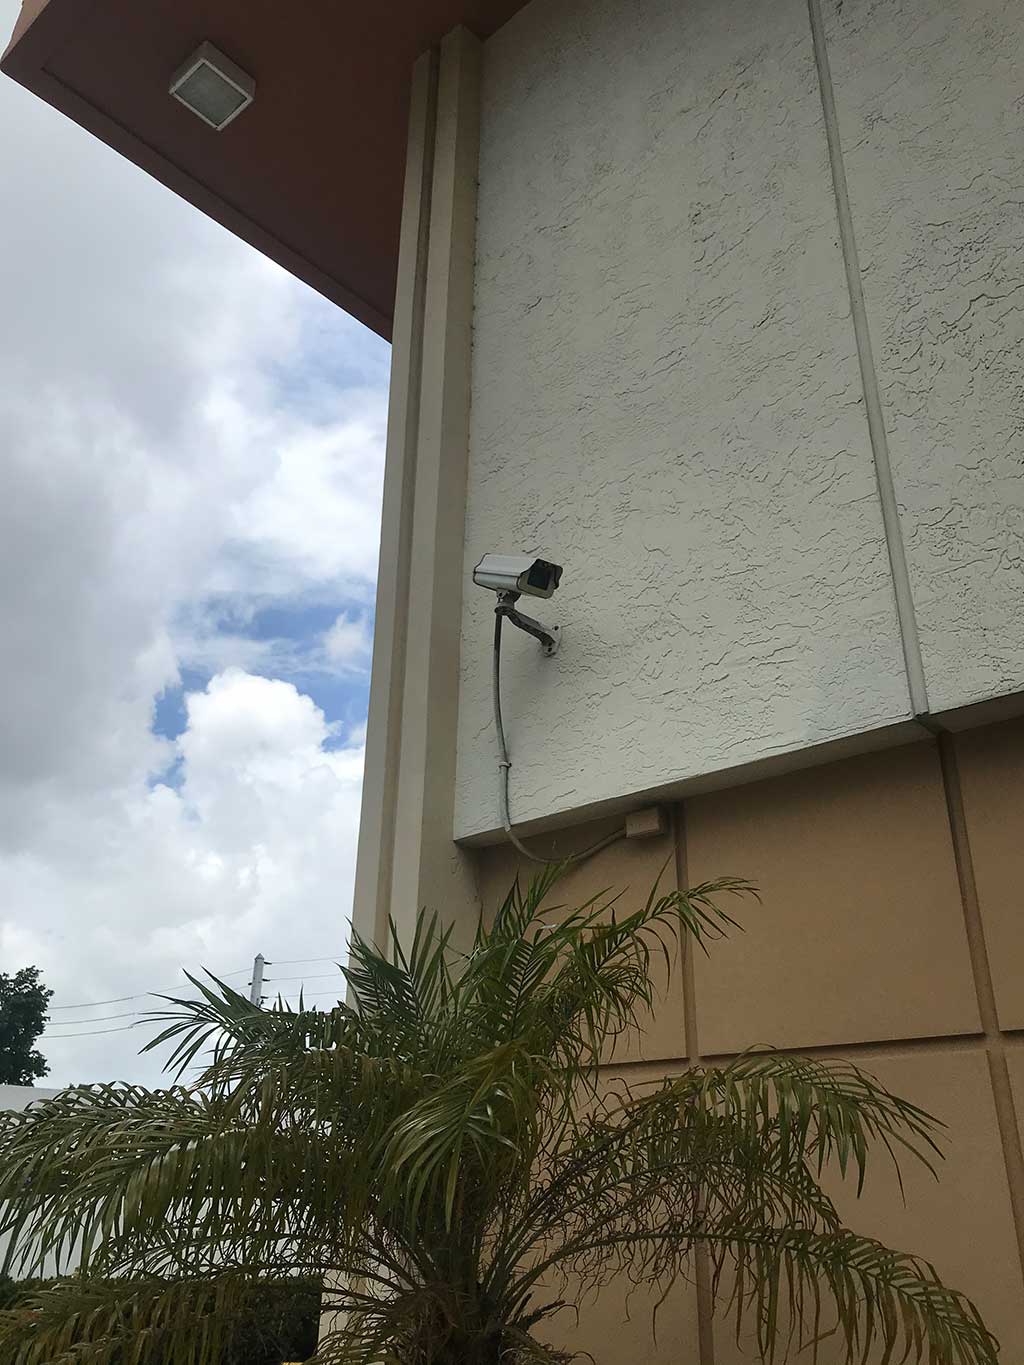 Camera at Miami Springs Police Station